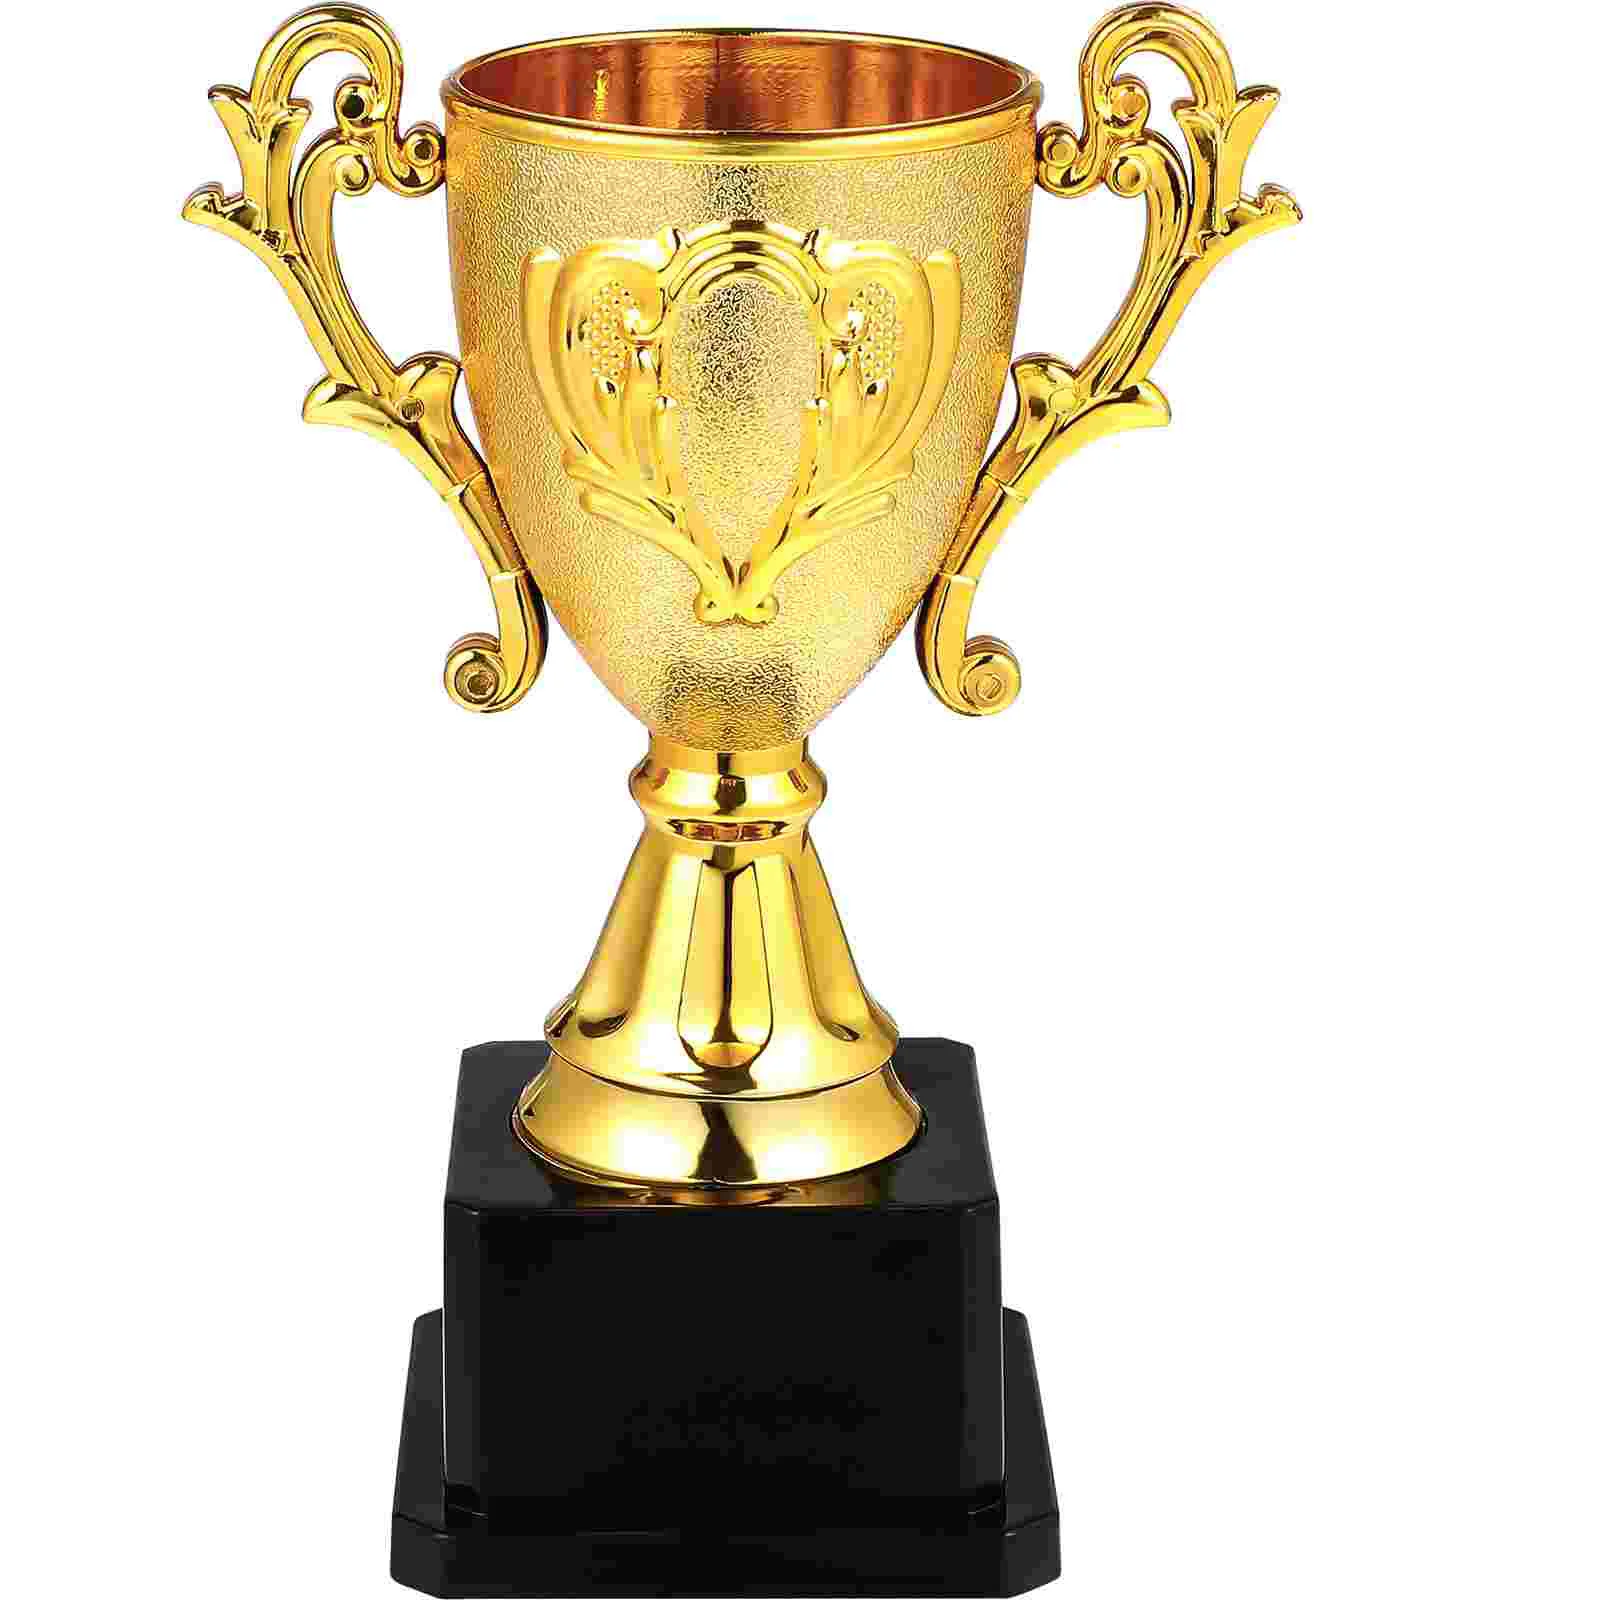 

Trophy Trophies Award Winner Plastic Kids Awards Gift Children Reward Toy Basketball League Participation Adults Tournaments